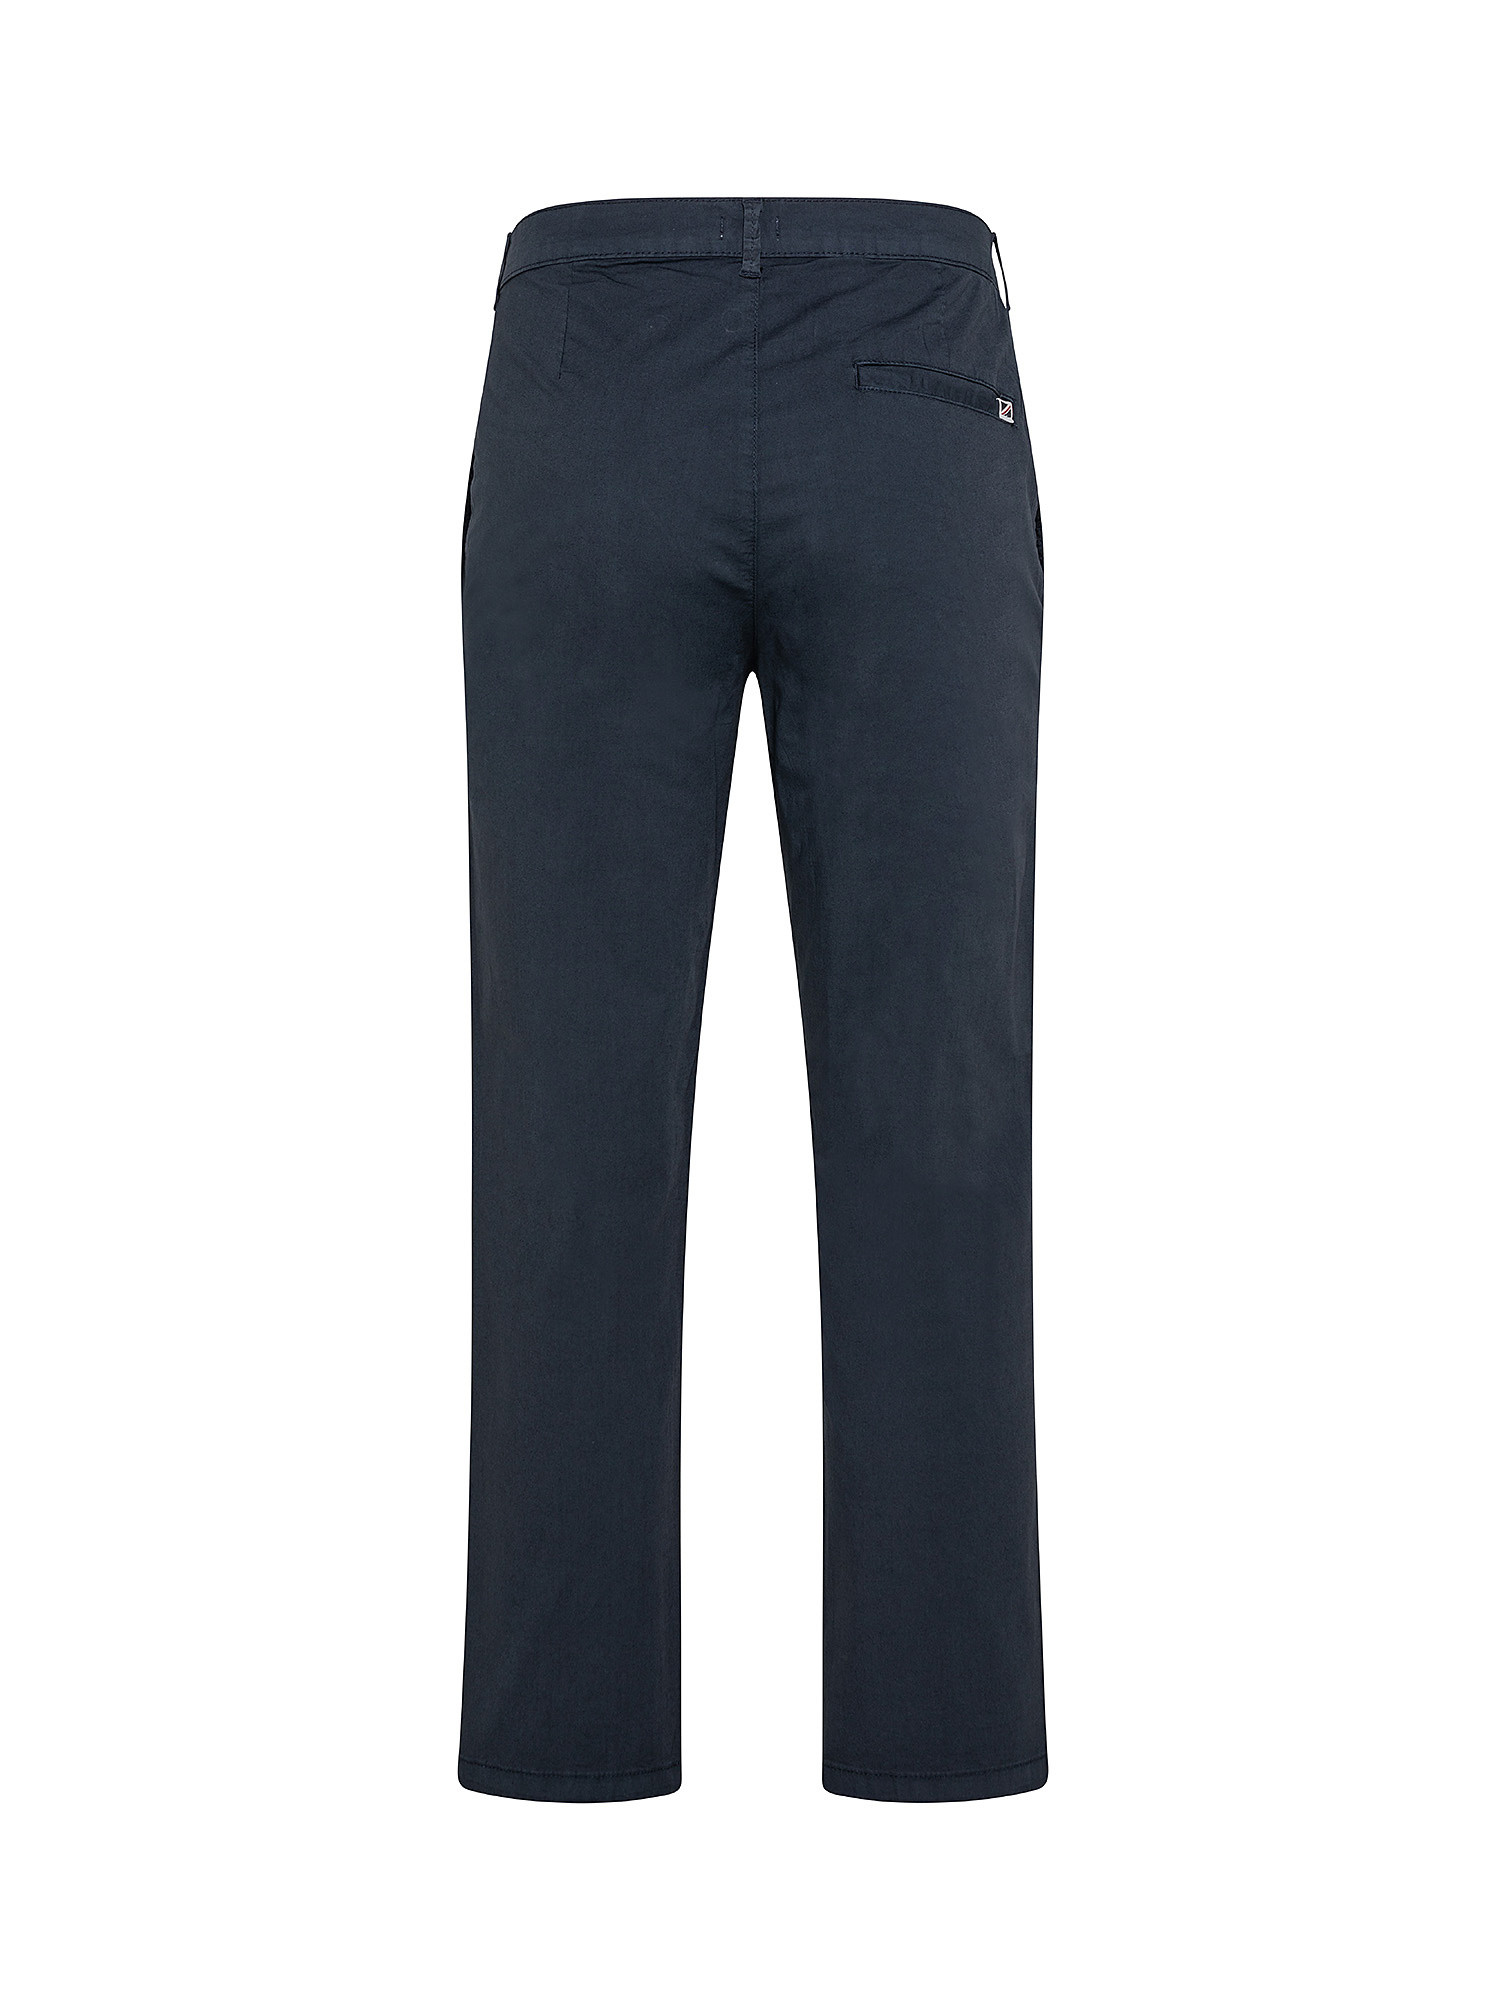 Jareth dress pants, Dark Blue, large image number 1